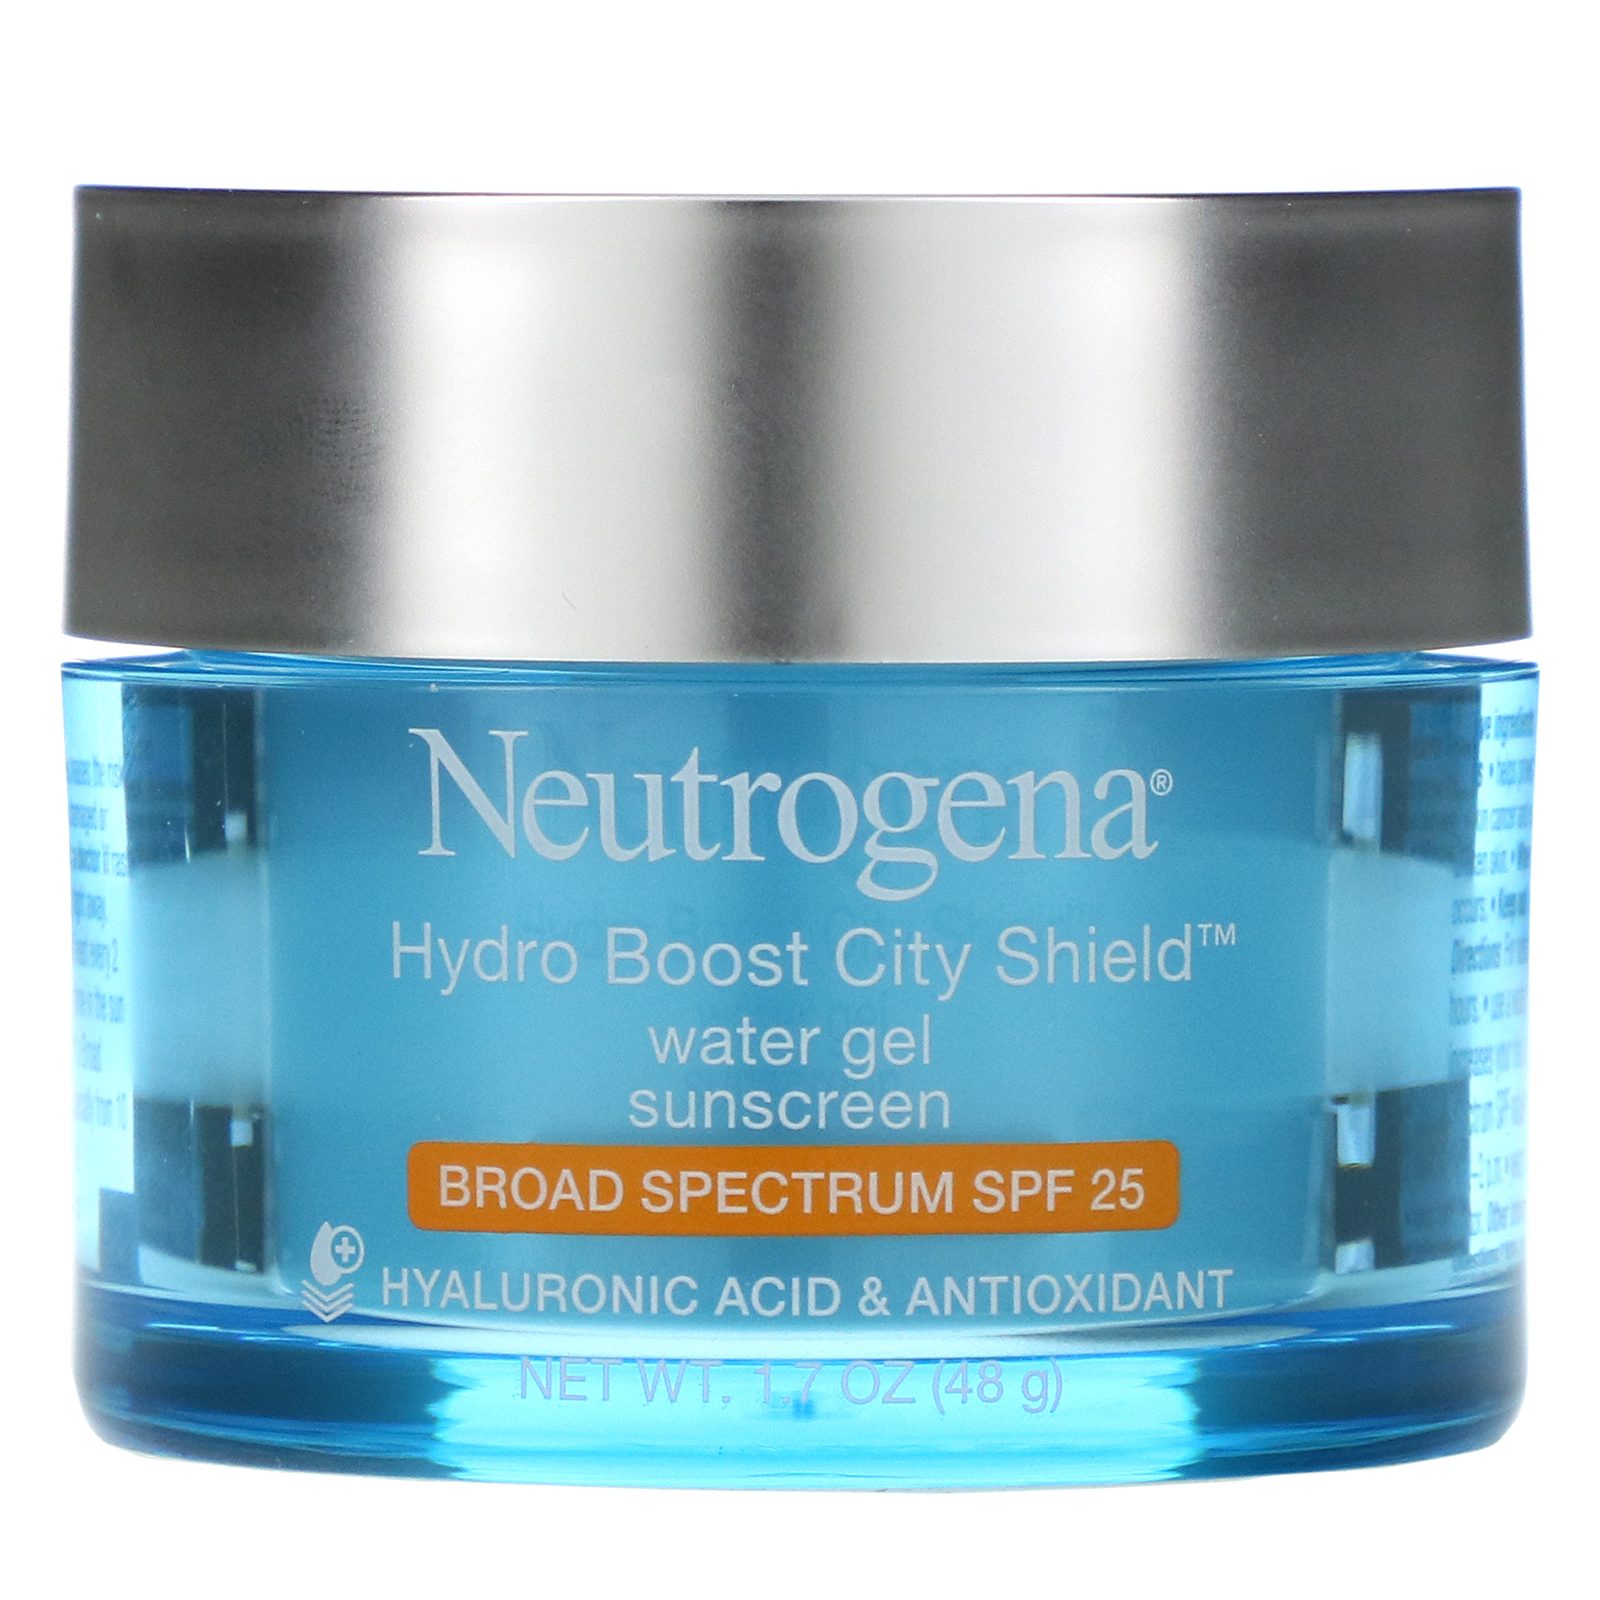 neutrogena sunscreen hydroboost